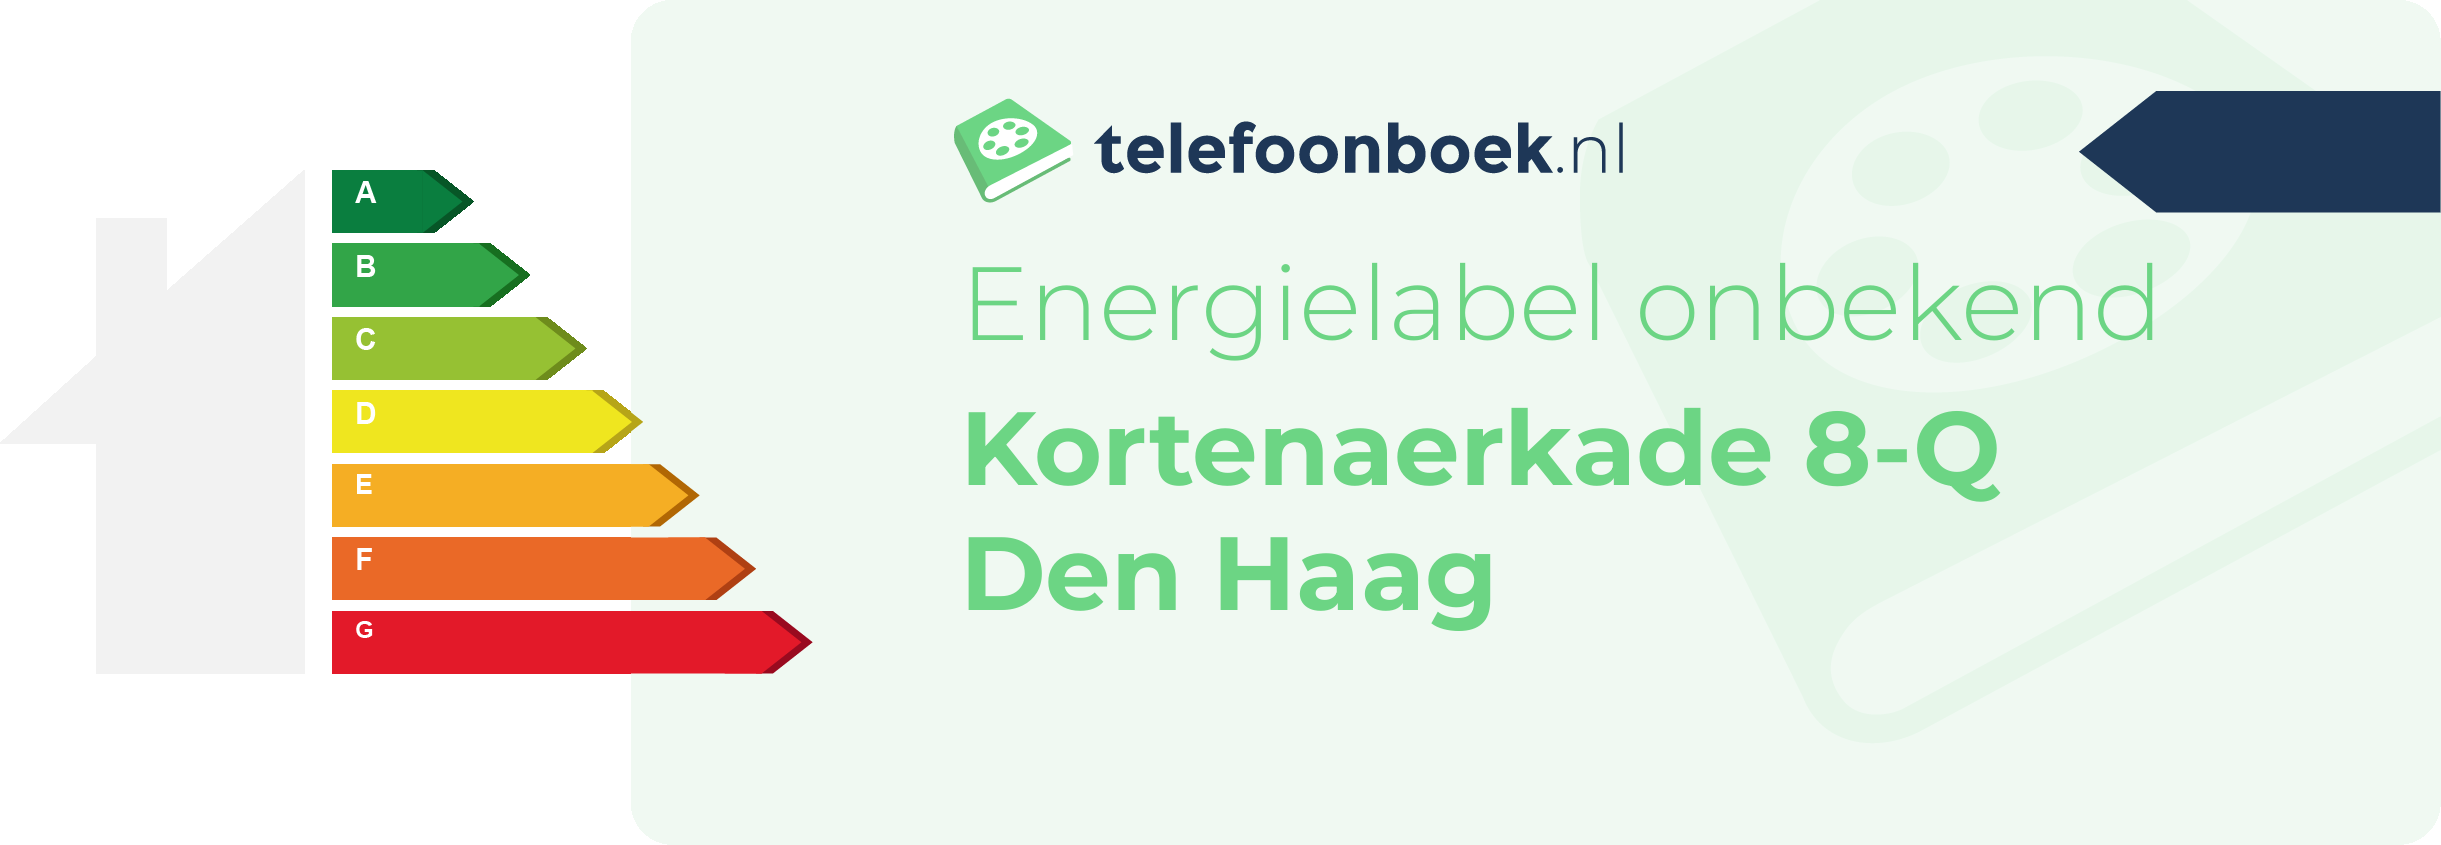 Energielabel Kortenaerkade 8-Q Den Haag